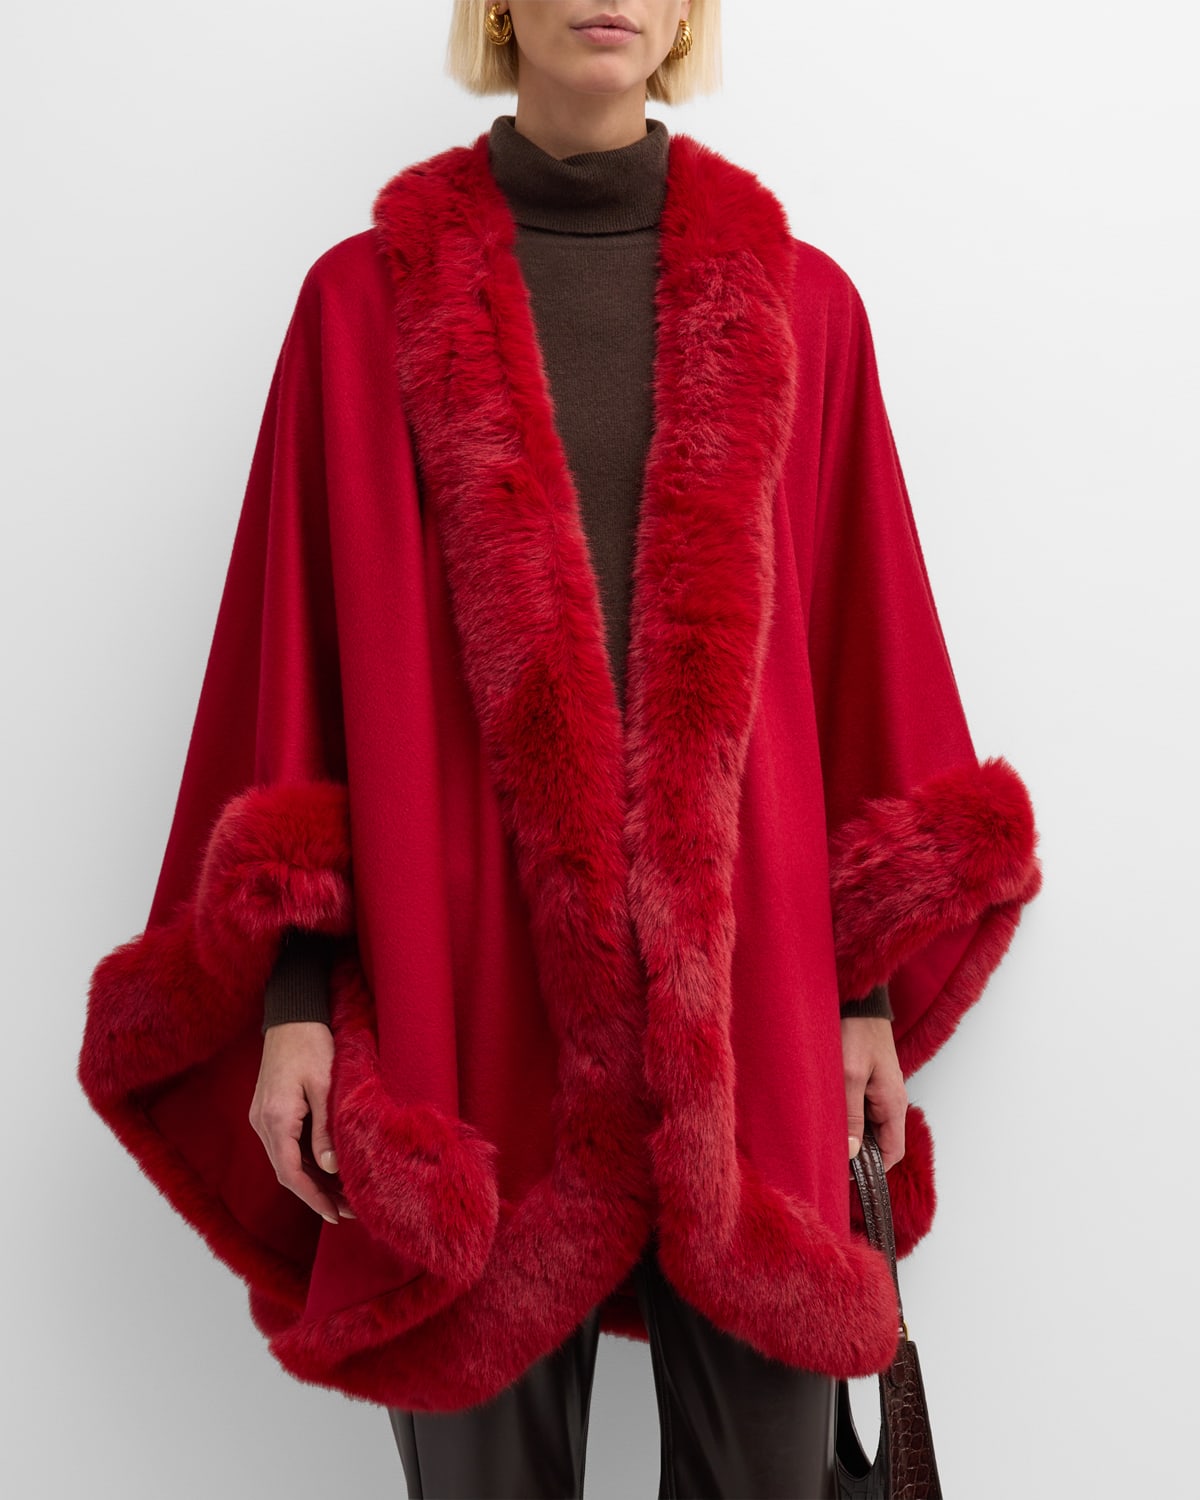 Sofia Cashmere Cashmere Cape With Faux Fur Trim In Red